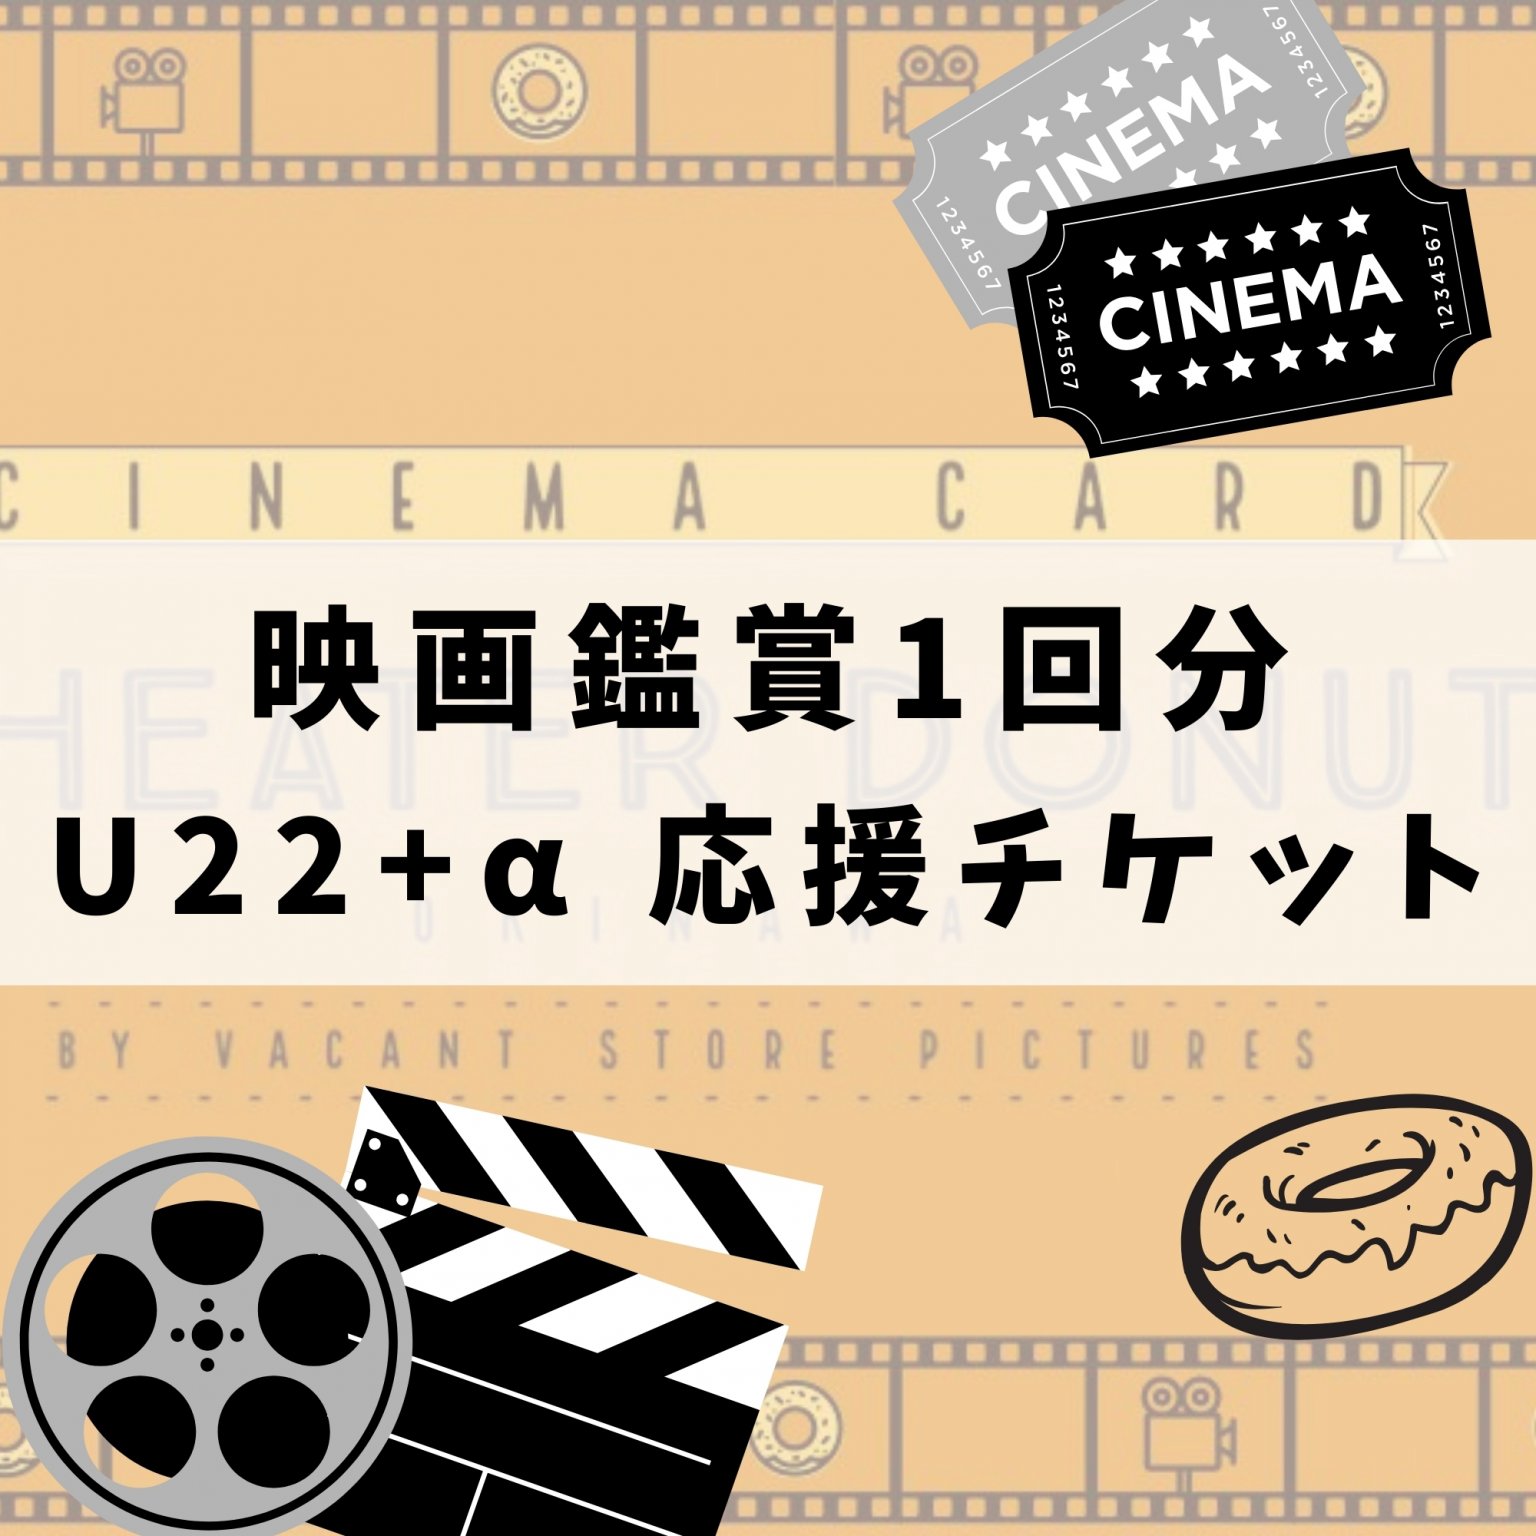 U22+α学生応援・映画観賞WEBチケット(1回鑑賞分)【22歳以下、中学1年生以上の年齢】